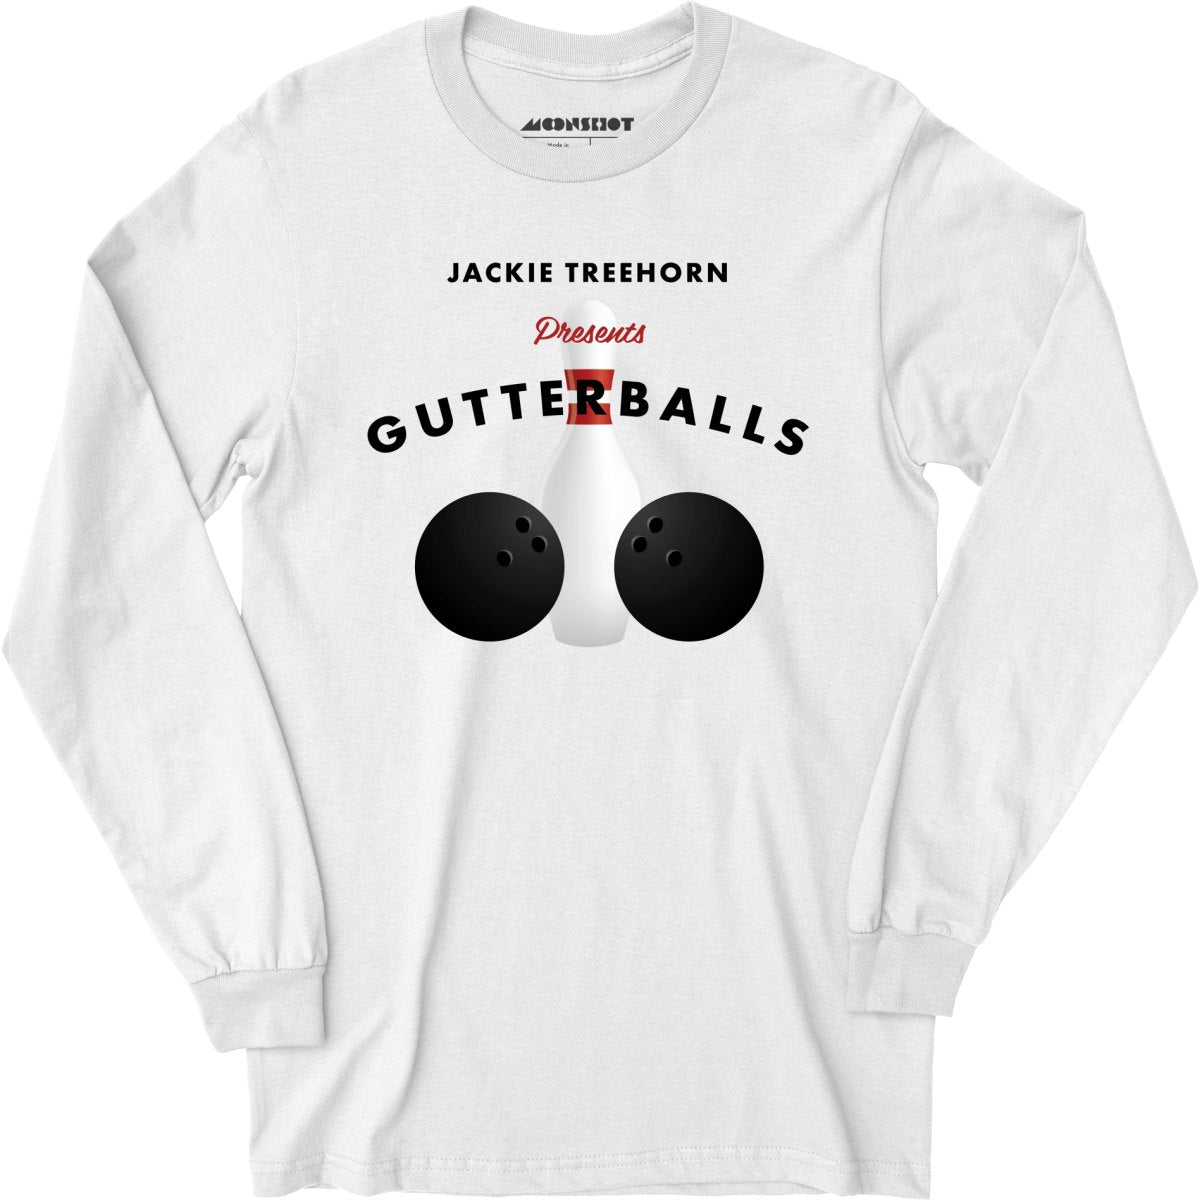 Jackie Treehorn Presents Gutterballs - Long Sleeve T-Shirt